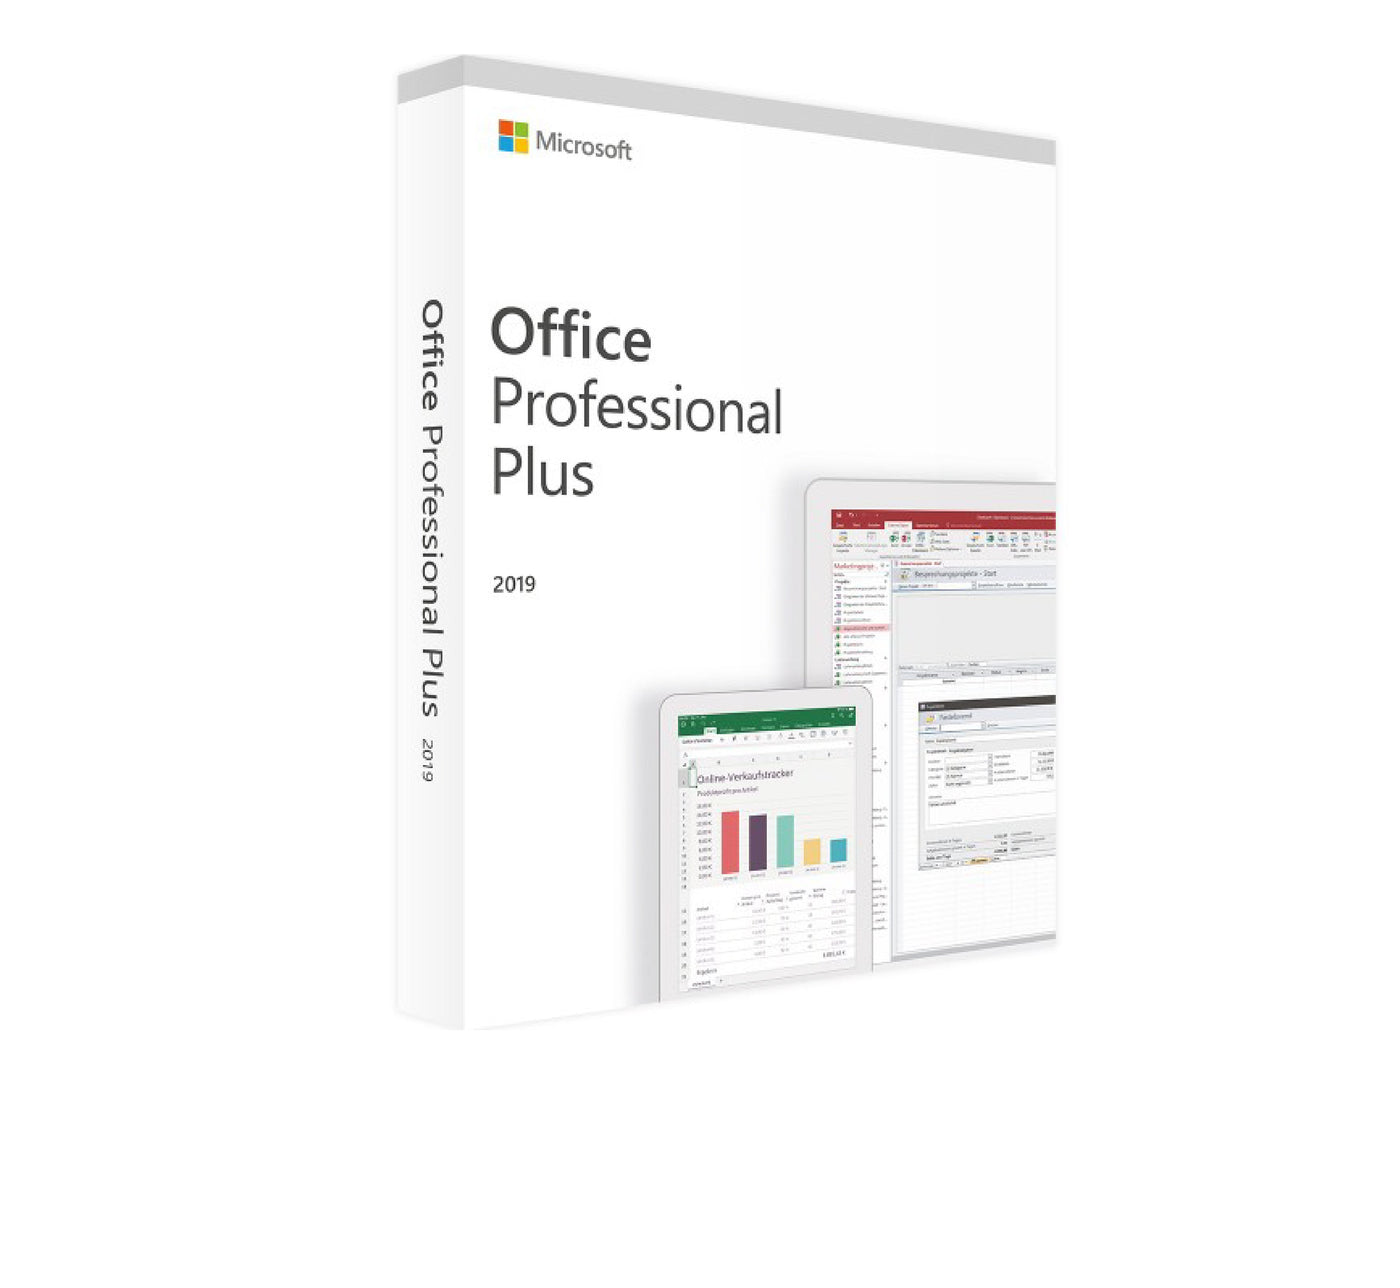 #Microsoft Office 2019 Professional Plus